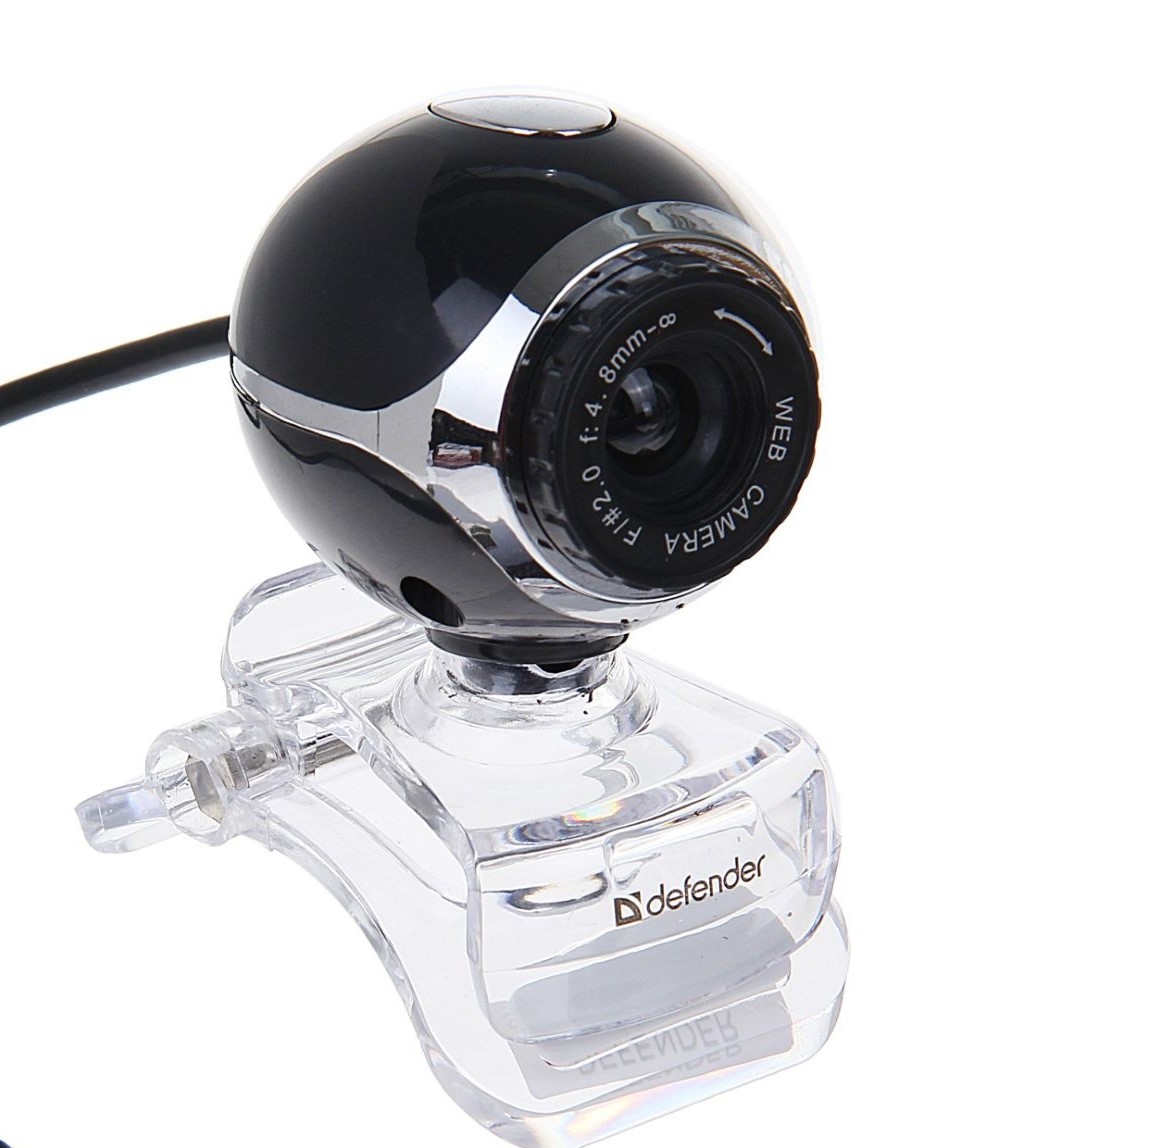 Digital Web Camera Defender C-090